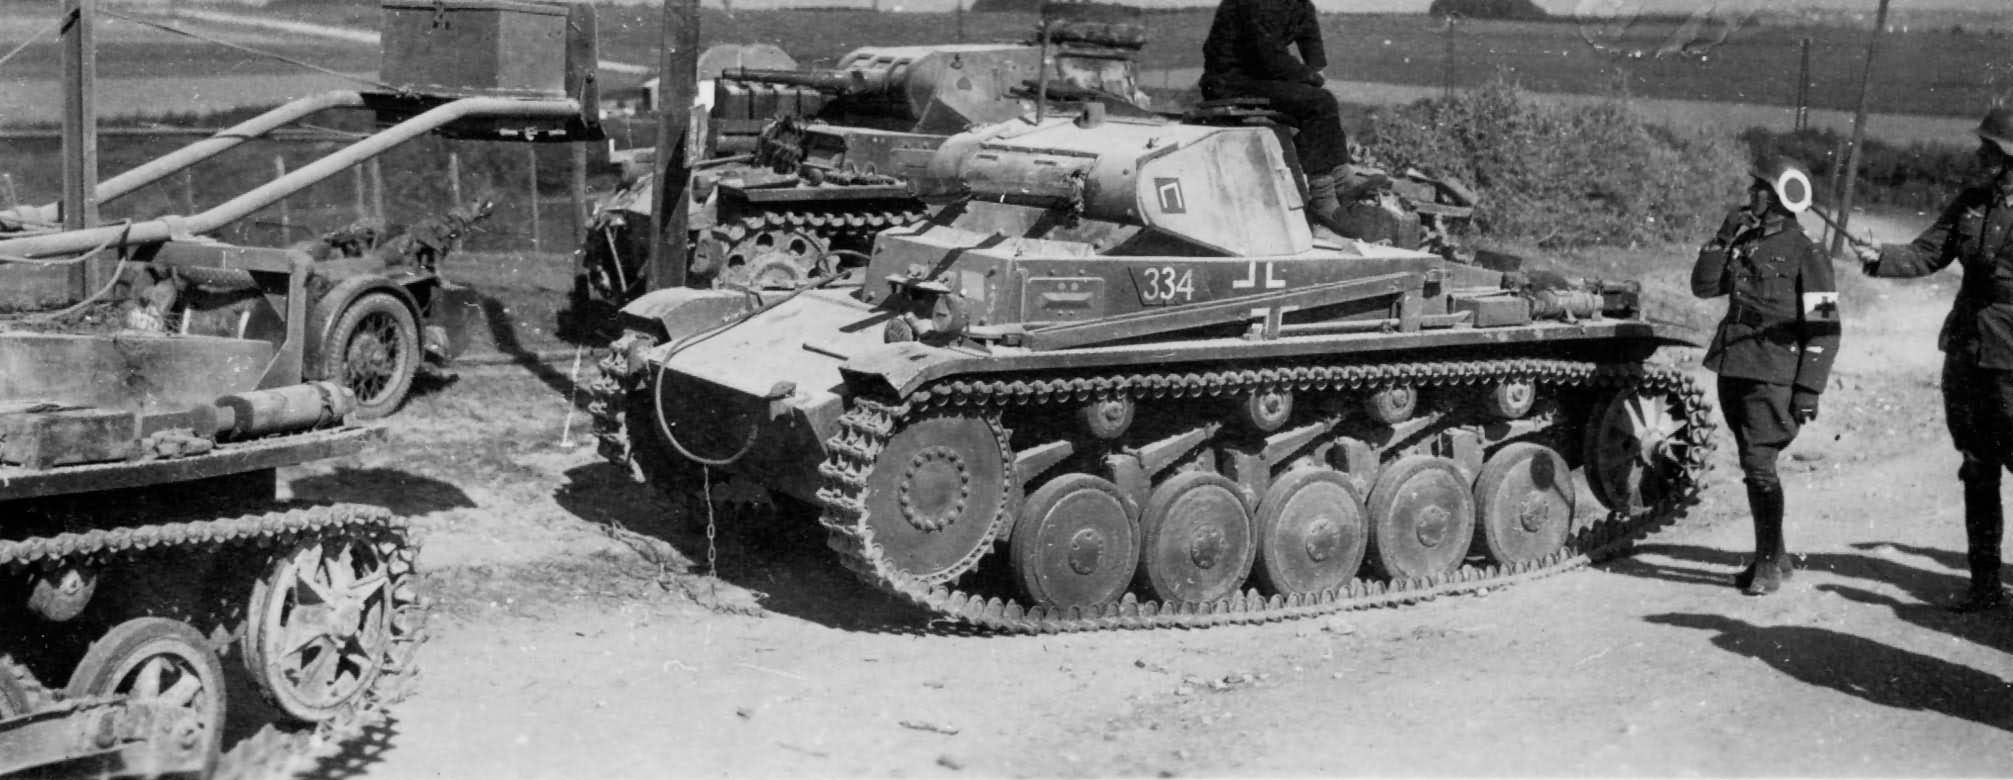 Nice Images Collection: Panzer II Desktop Wallpapers